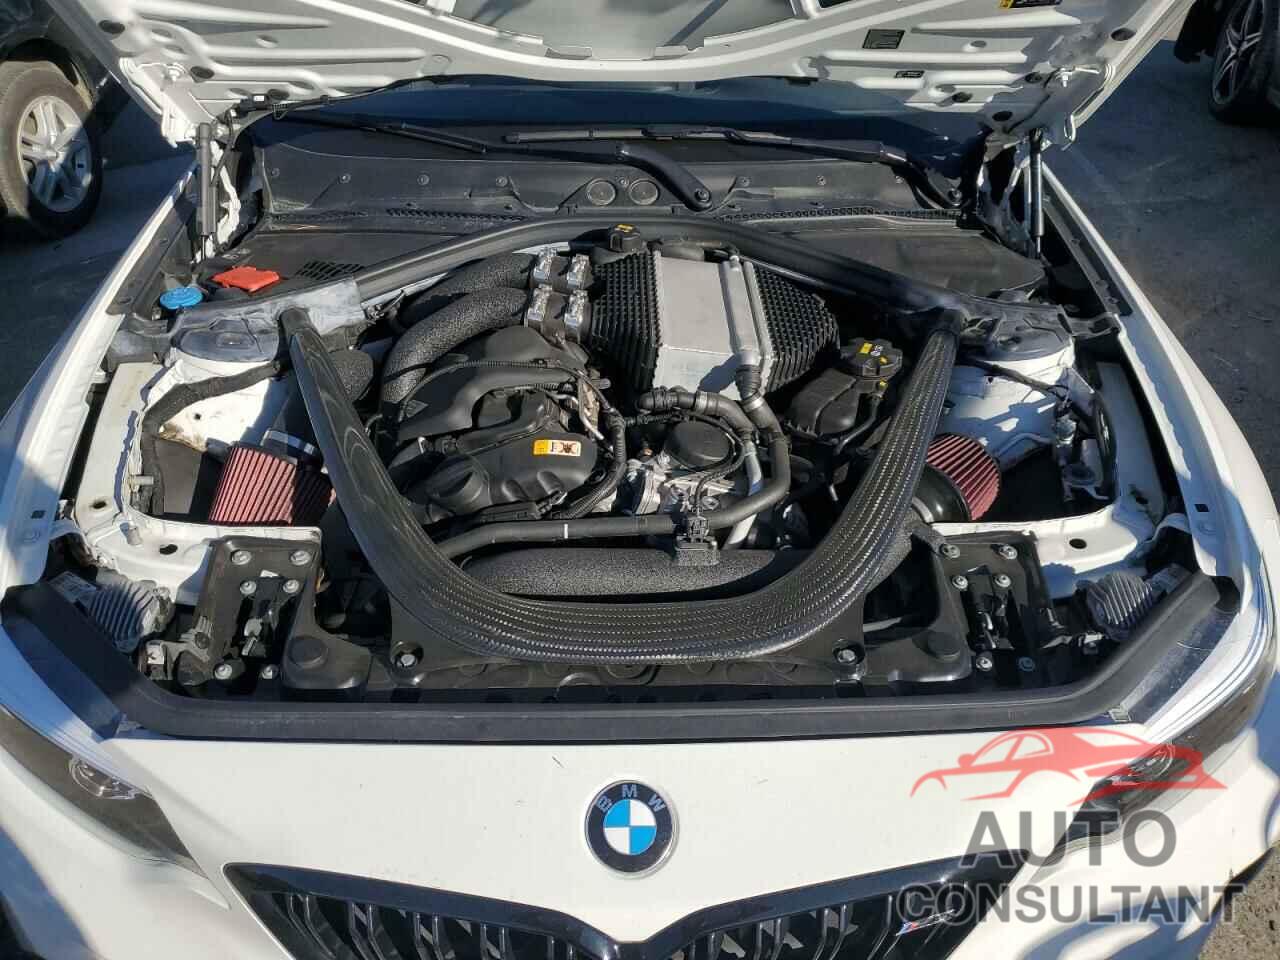 BMW M2 2020 - WBS2U7C02L7E81264